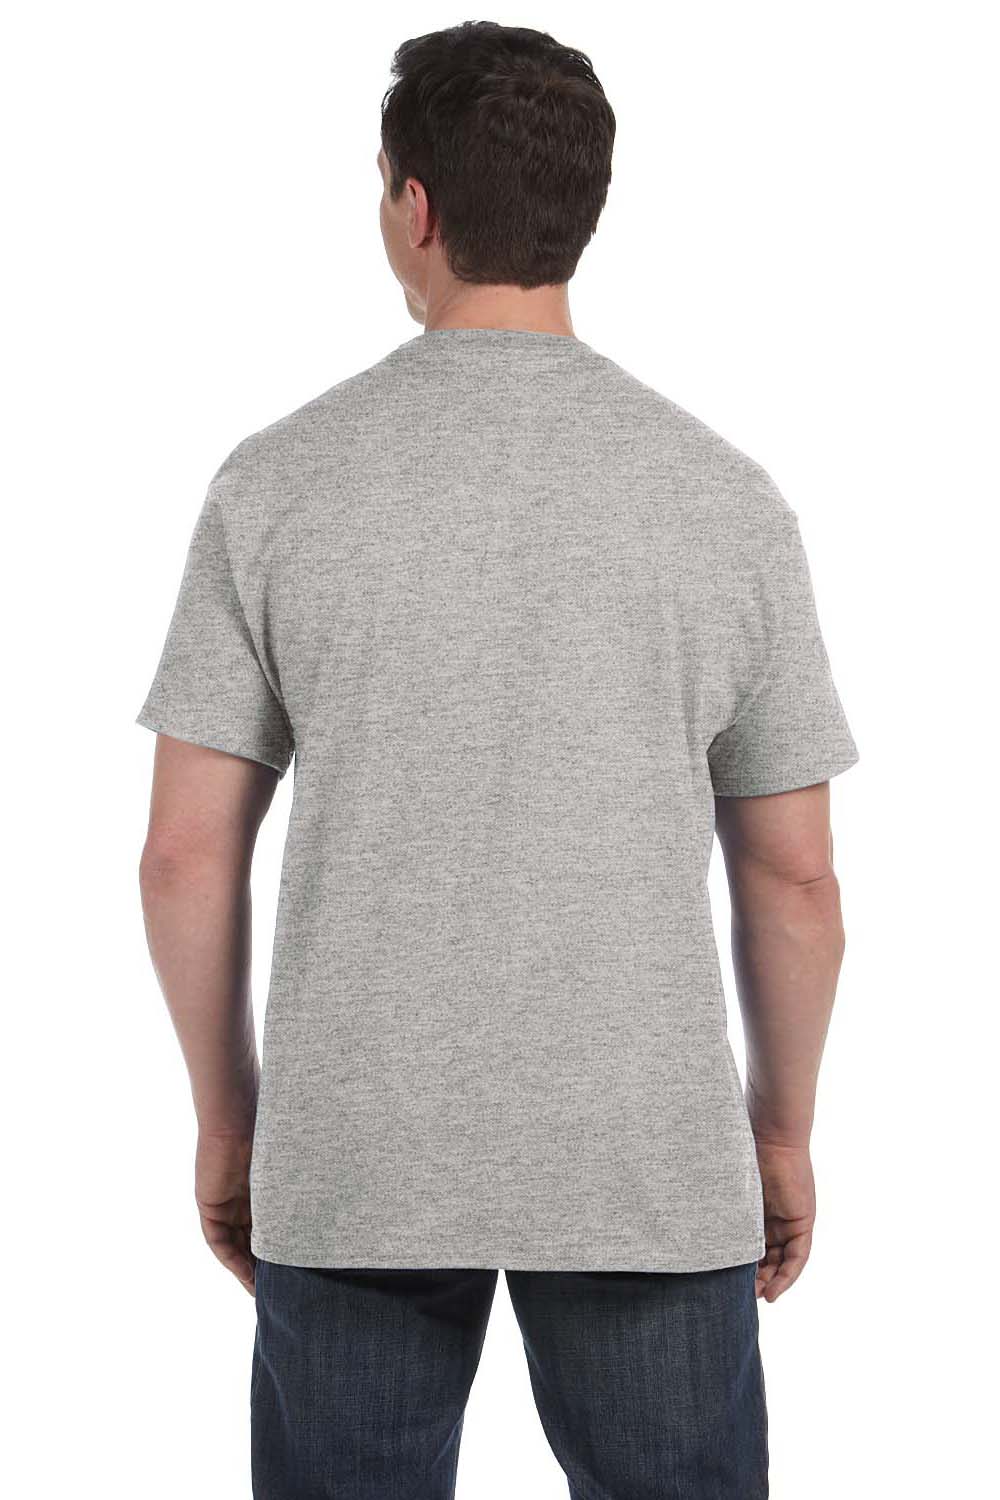 Hanes H5590 Mens ComfortSoft Short Sleeve Crewneck T-Shirt w/ Pocket Light Steel Grey Back